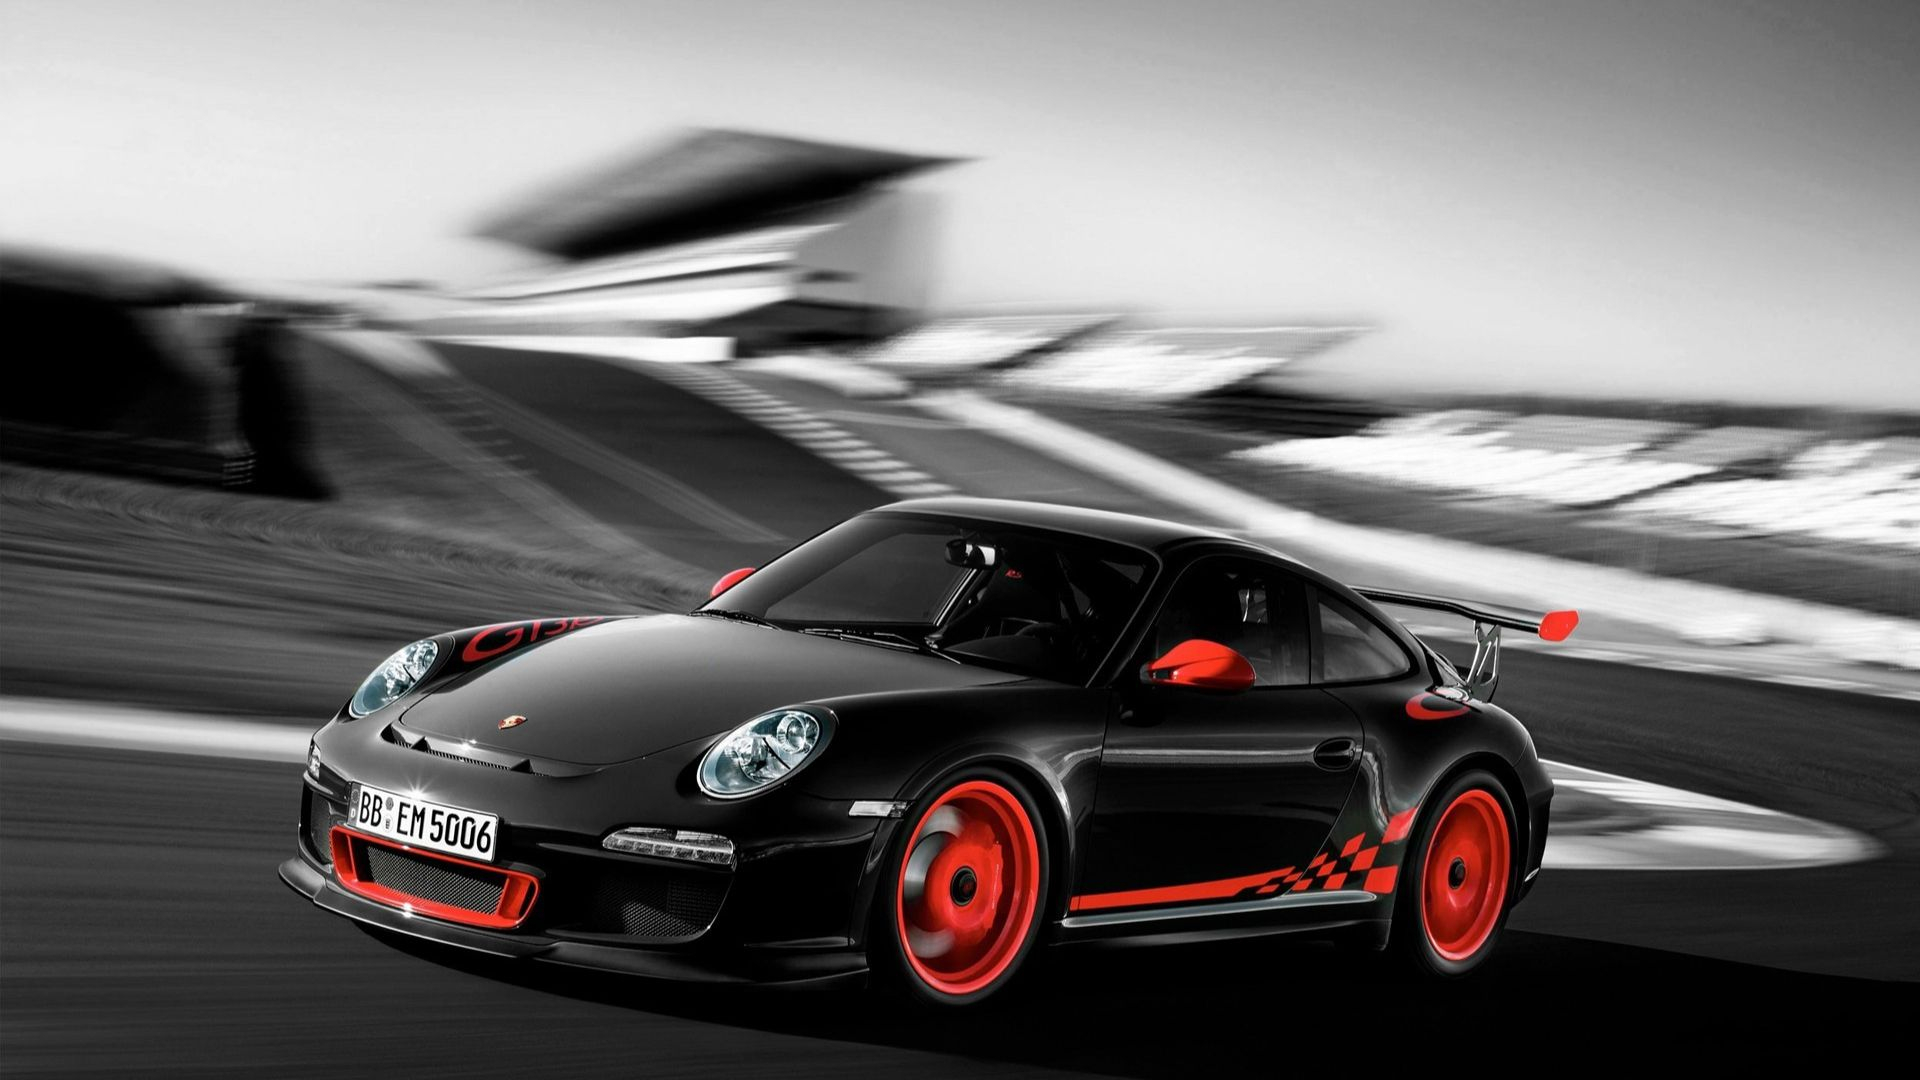 1920x1080 Porsche 911 GT3 Wallpapers ; Top Free Porsche 911 GT3 Backgrounds, Pictures \u0026 Images Download